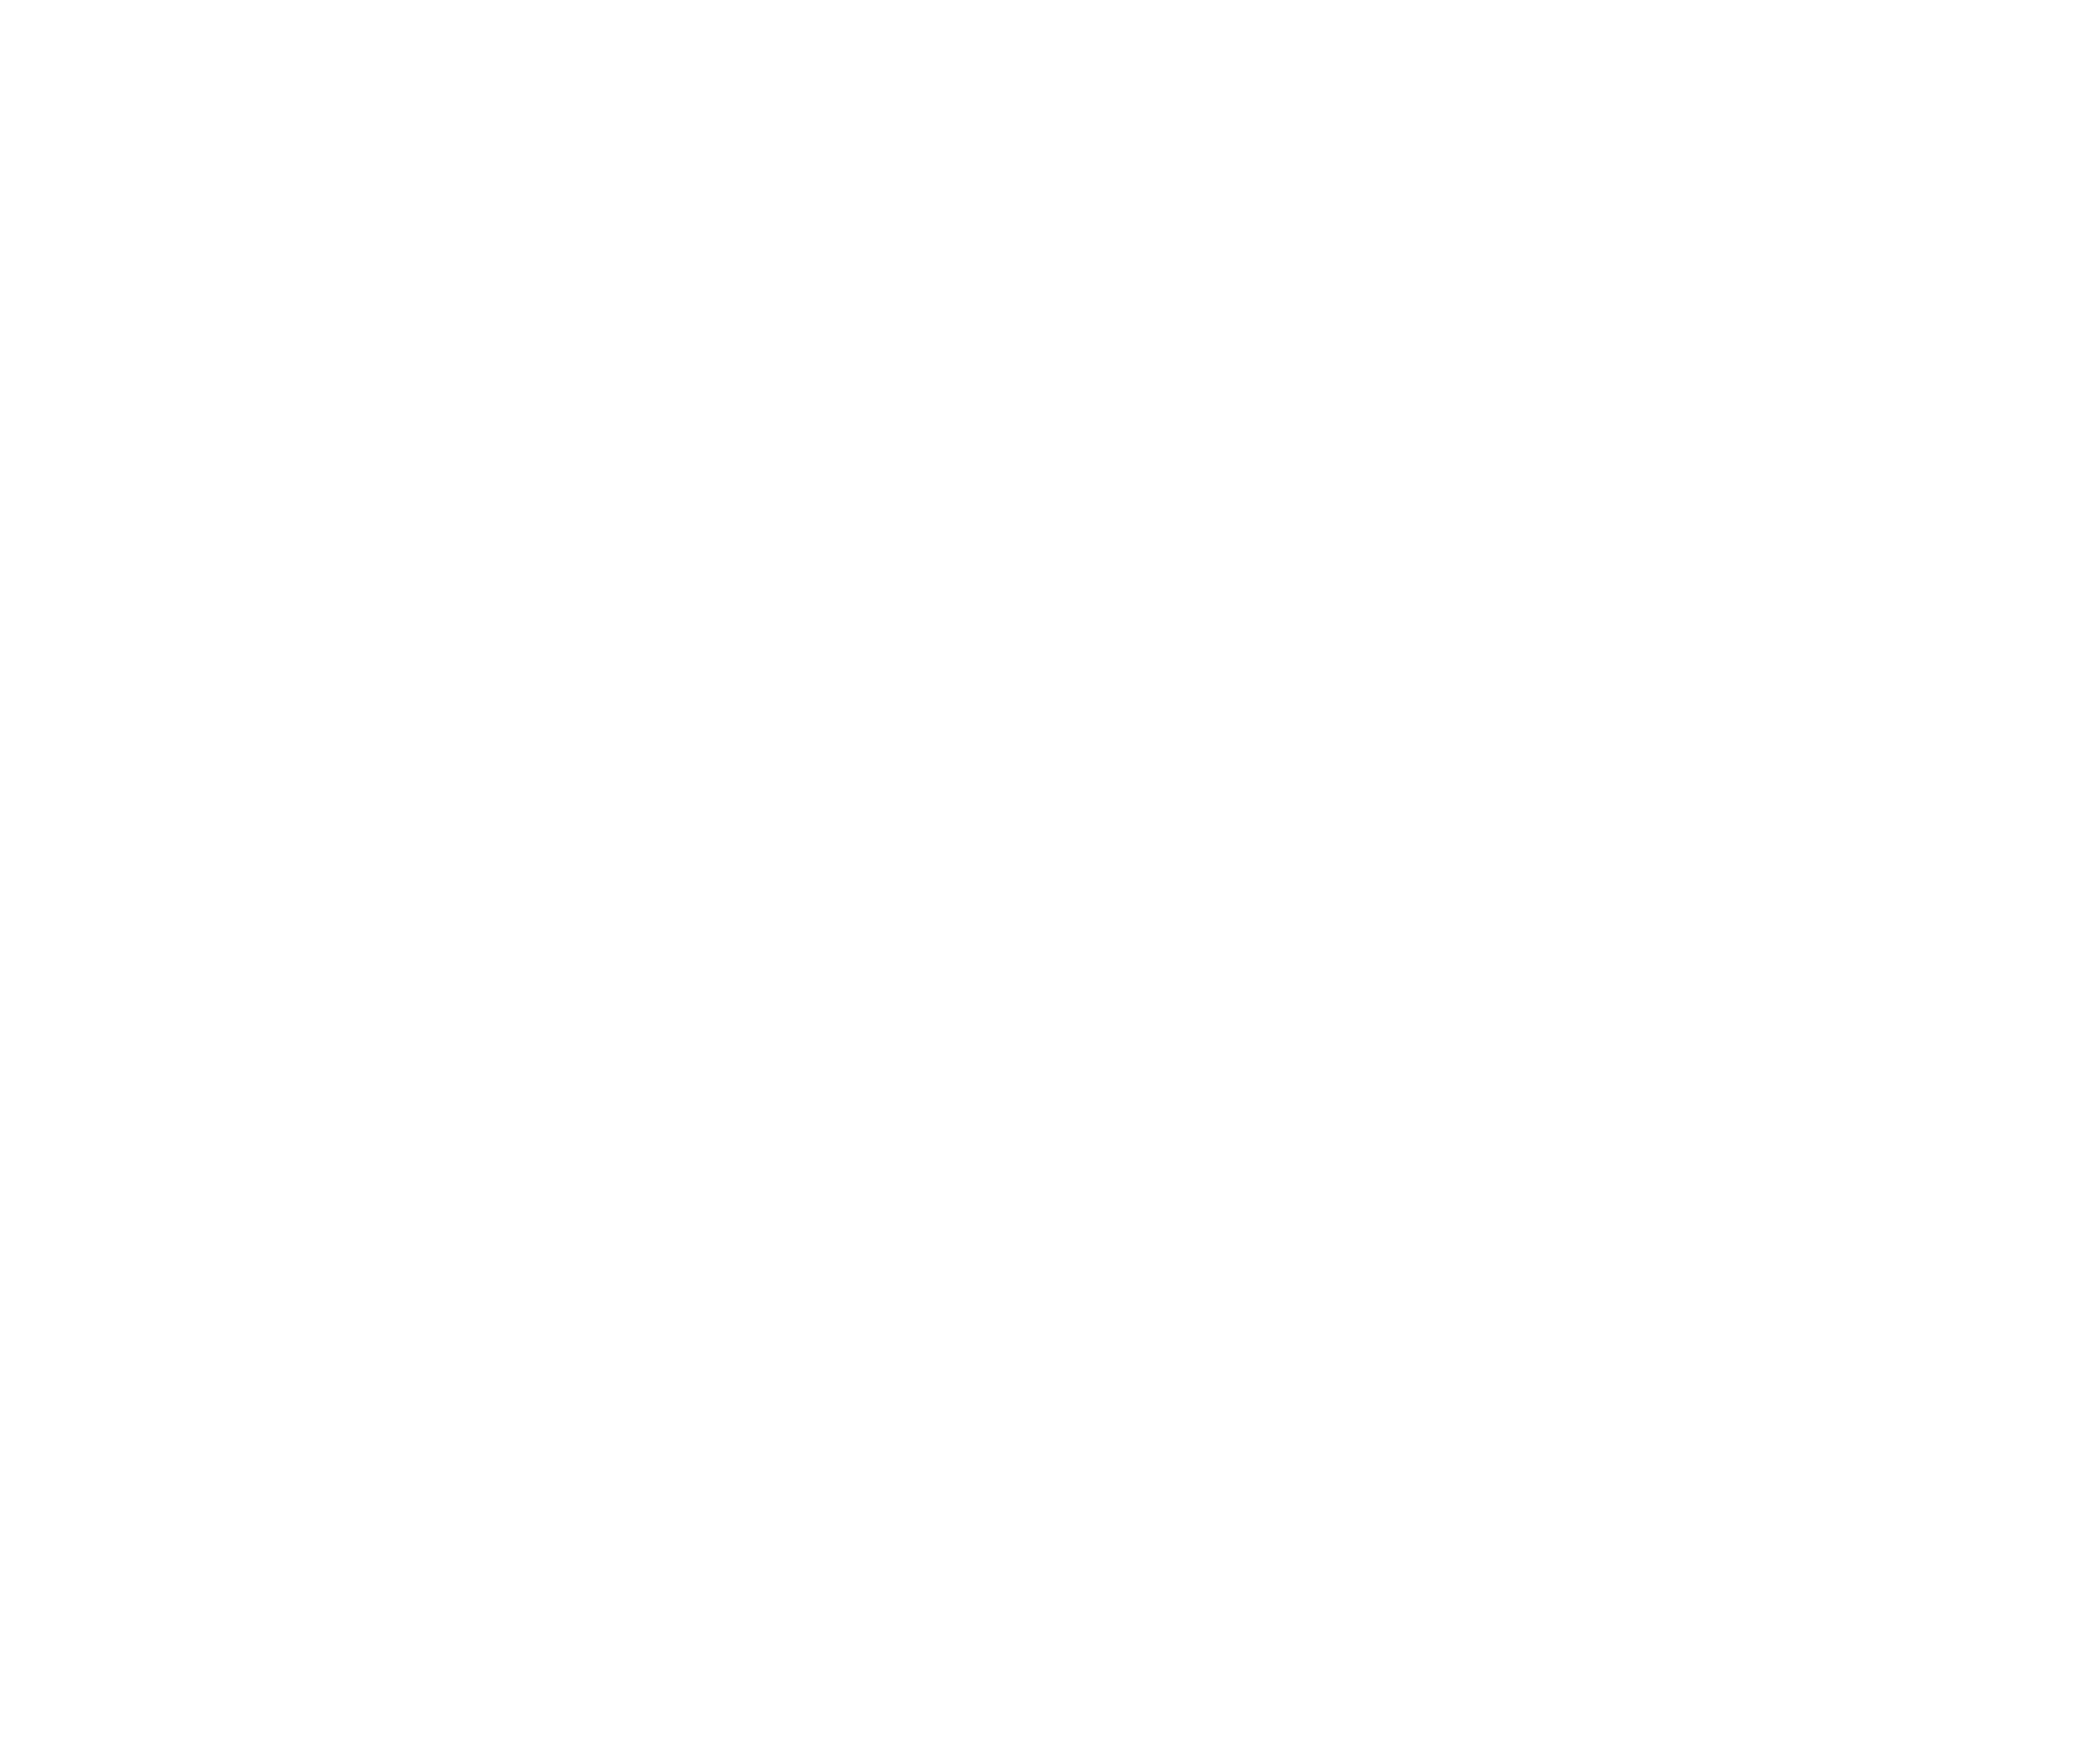 WellPaidExpertFinalFiles-07